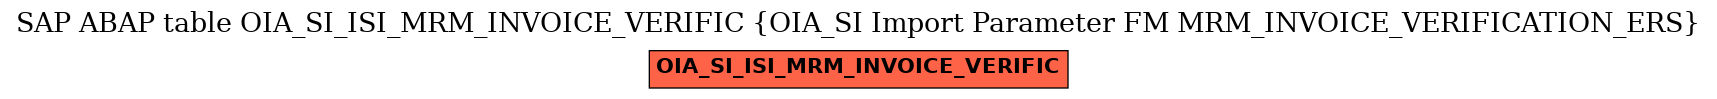 E-R Diagram for table OIA_SI_ISI_MRM_INVOICE_VERIFIC (OIA_SI Import Parameter FM MRM_INVOICE_VERIFICATION_ERS)